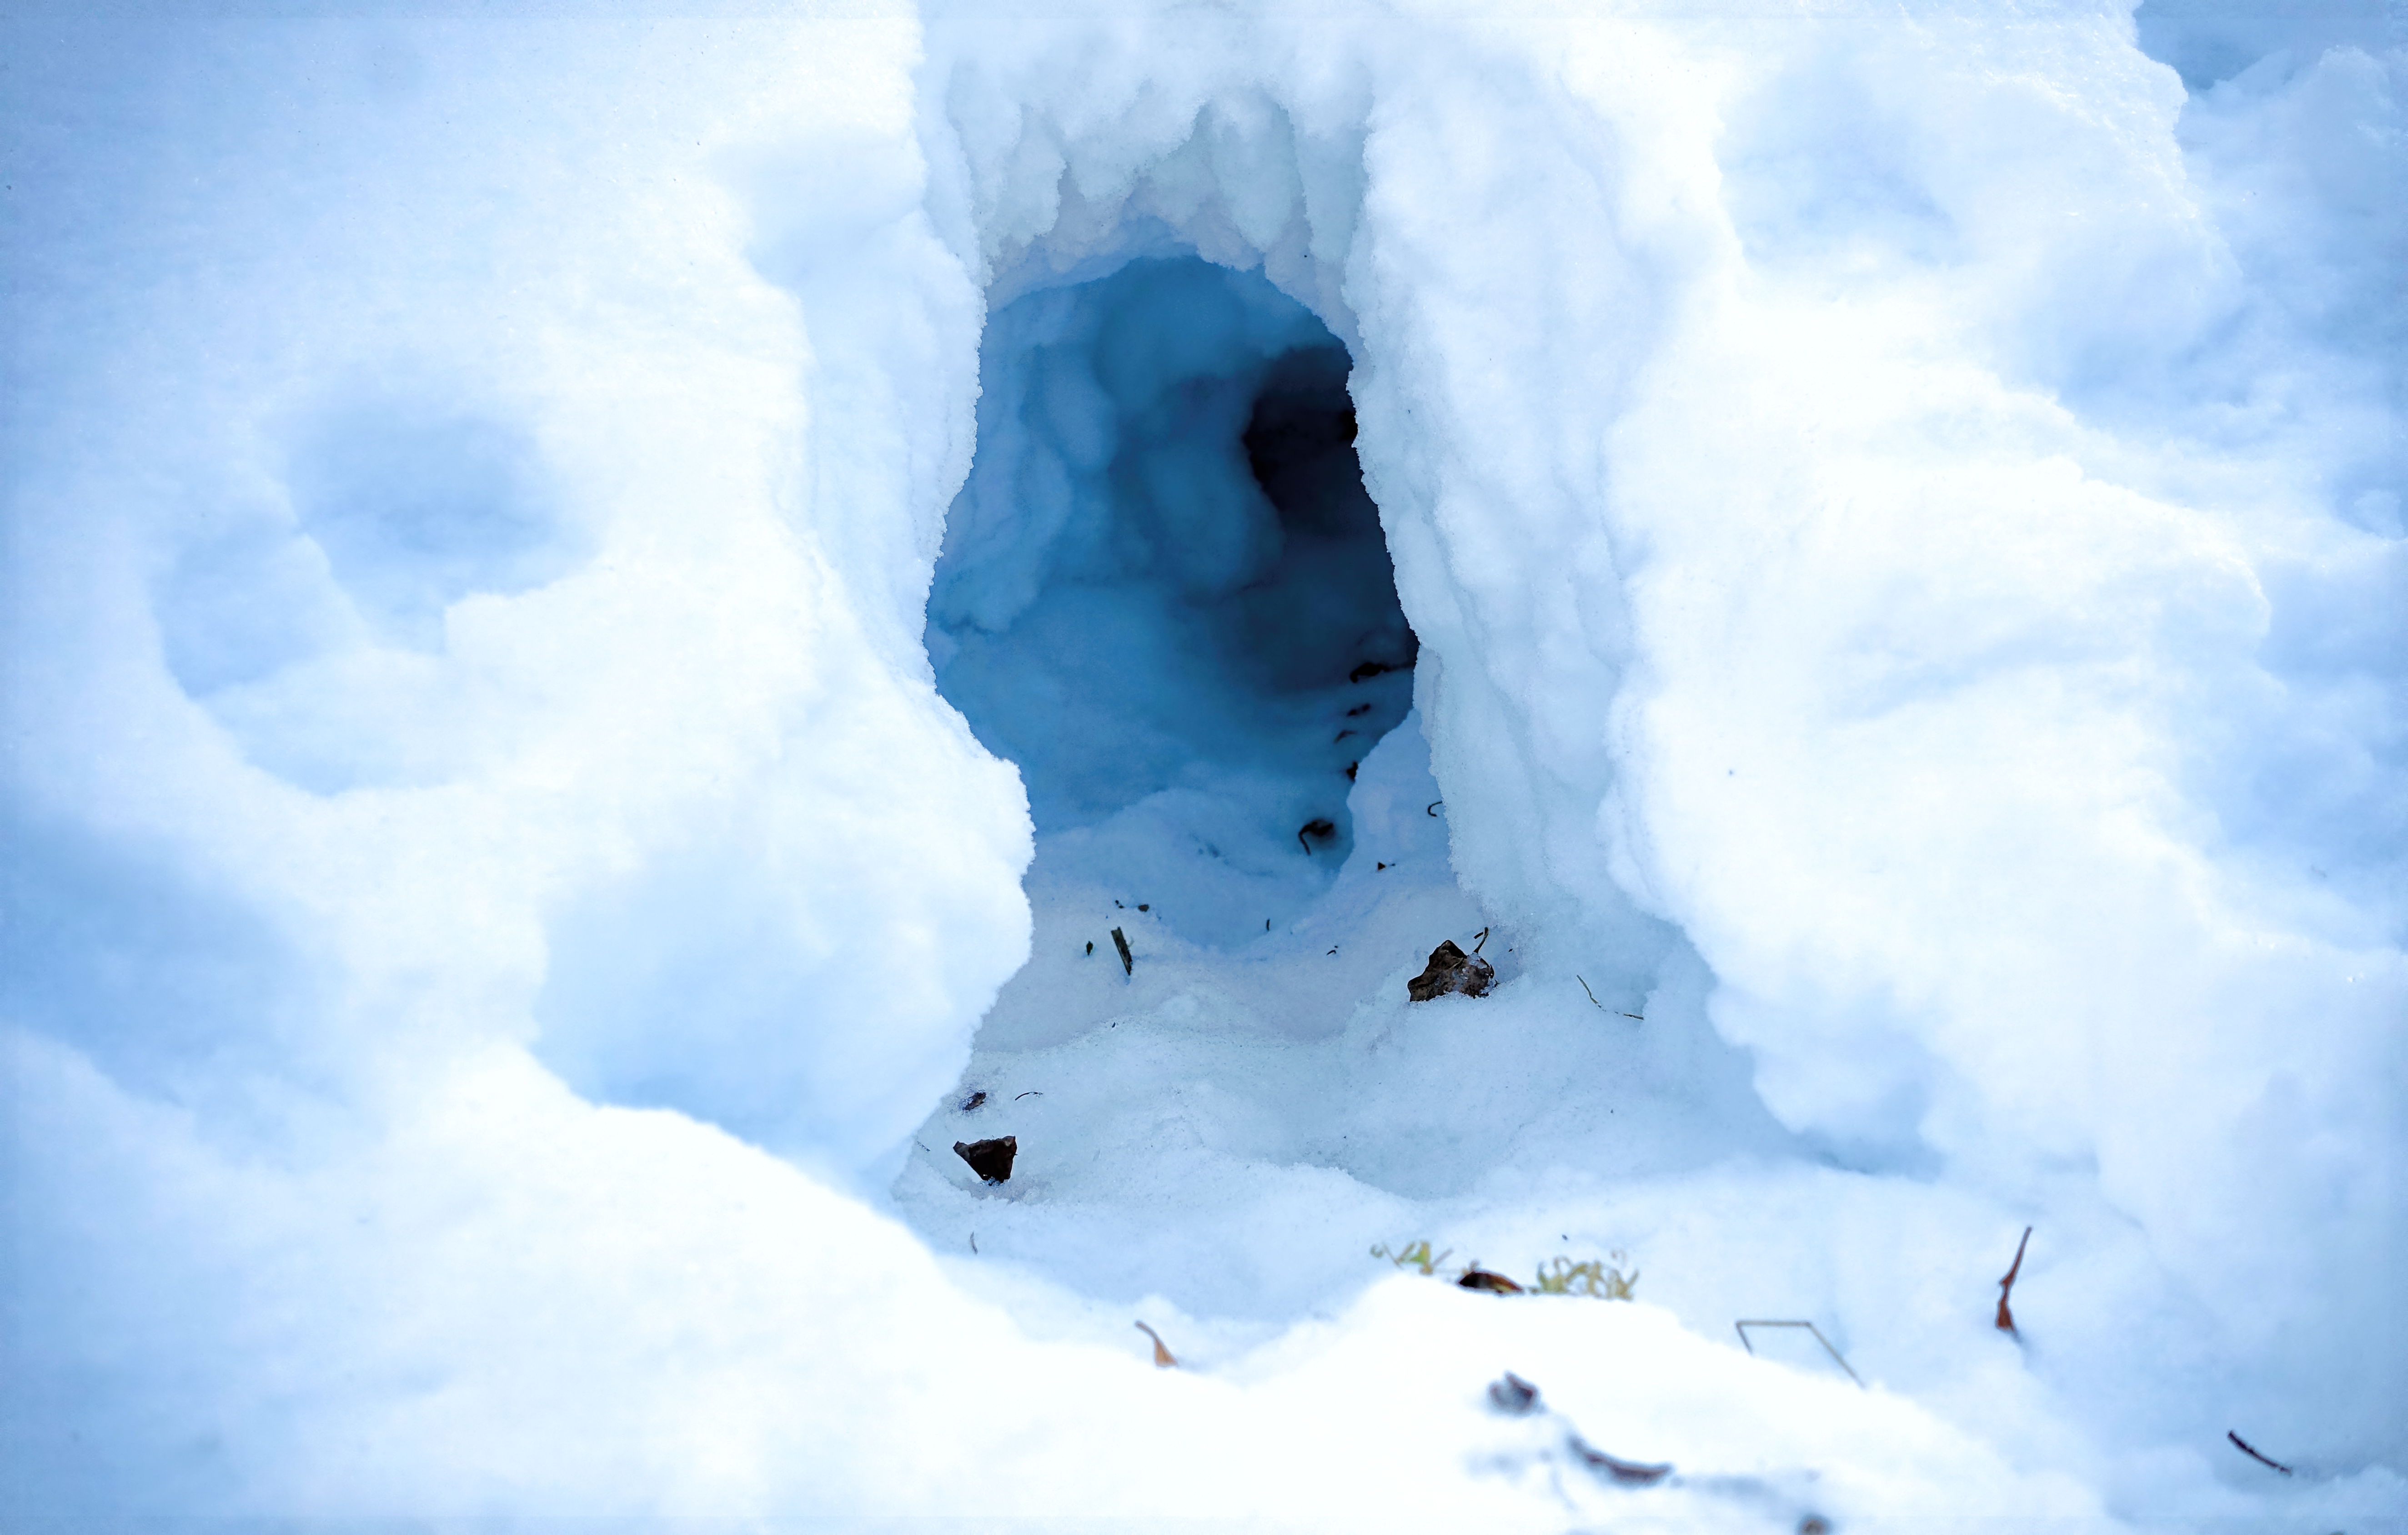 https://nsidc.org/sites/default/files/images/snow-cave-fox-Alaska.jpg